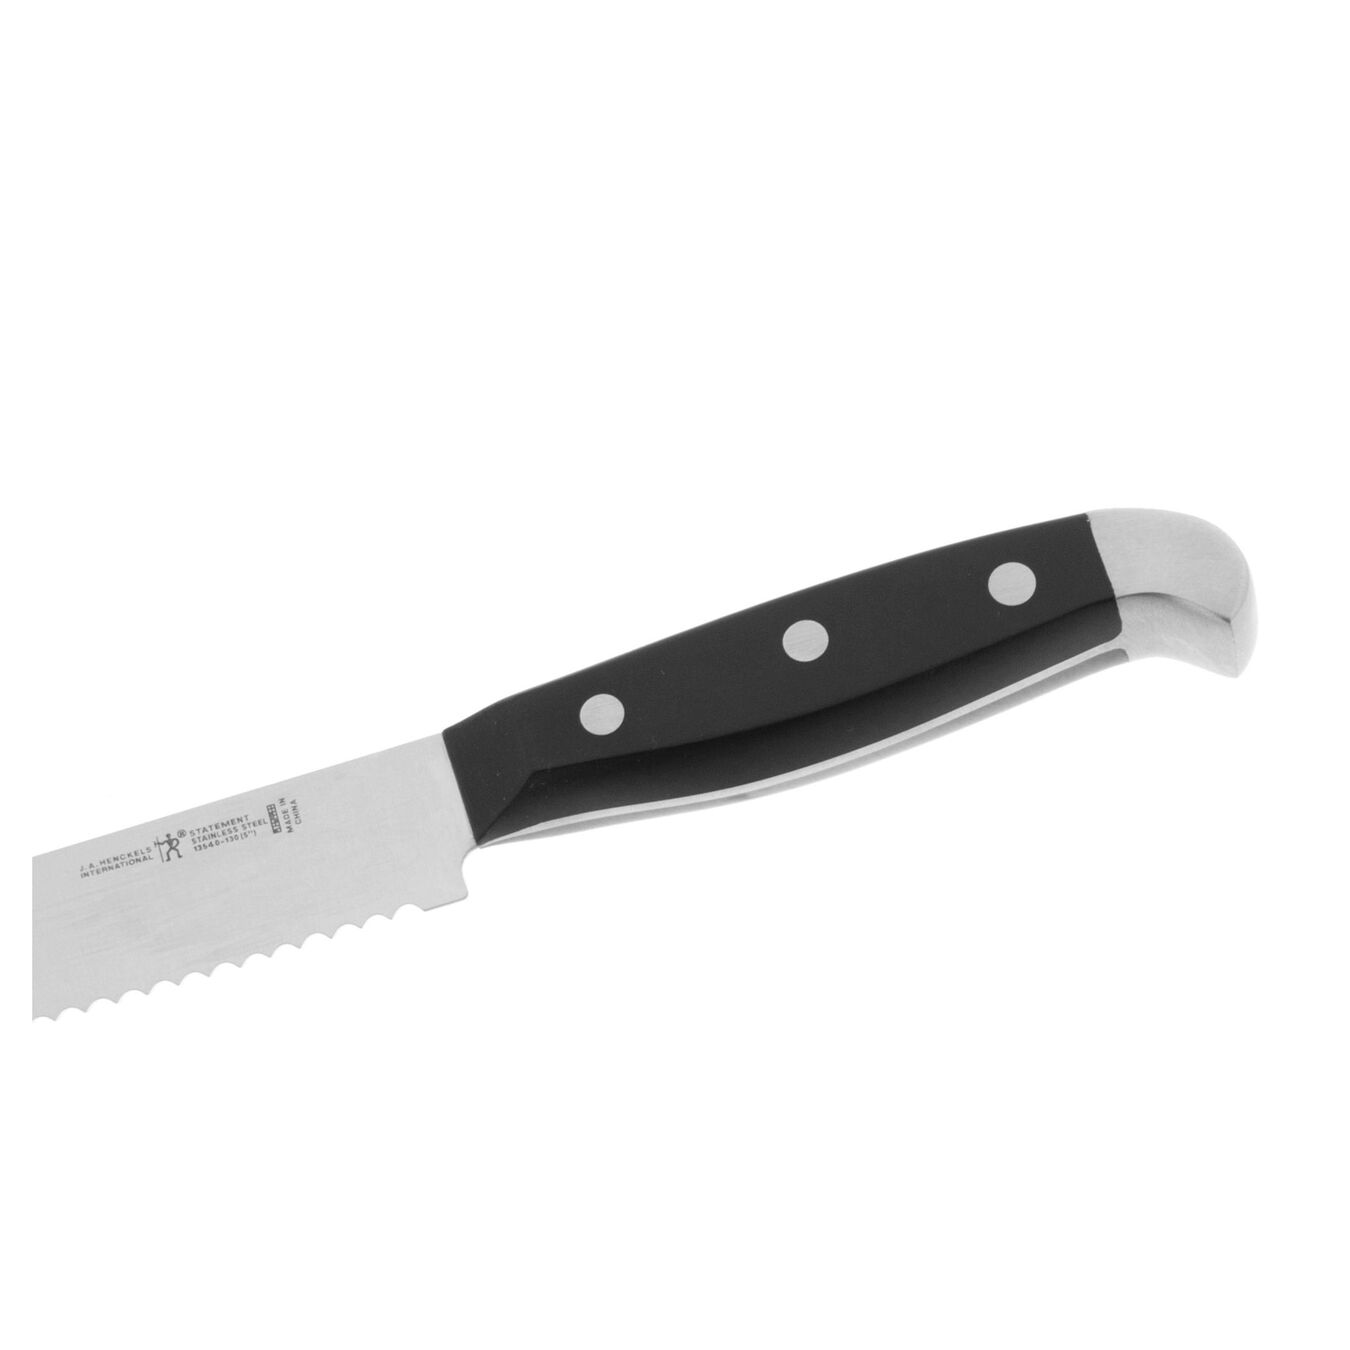 5-inch Utility knife, Serrated edge ,,large 3